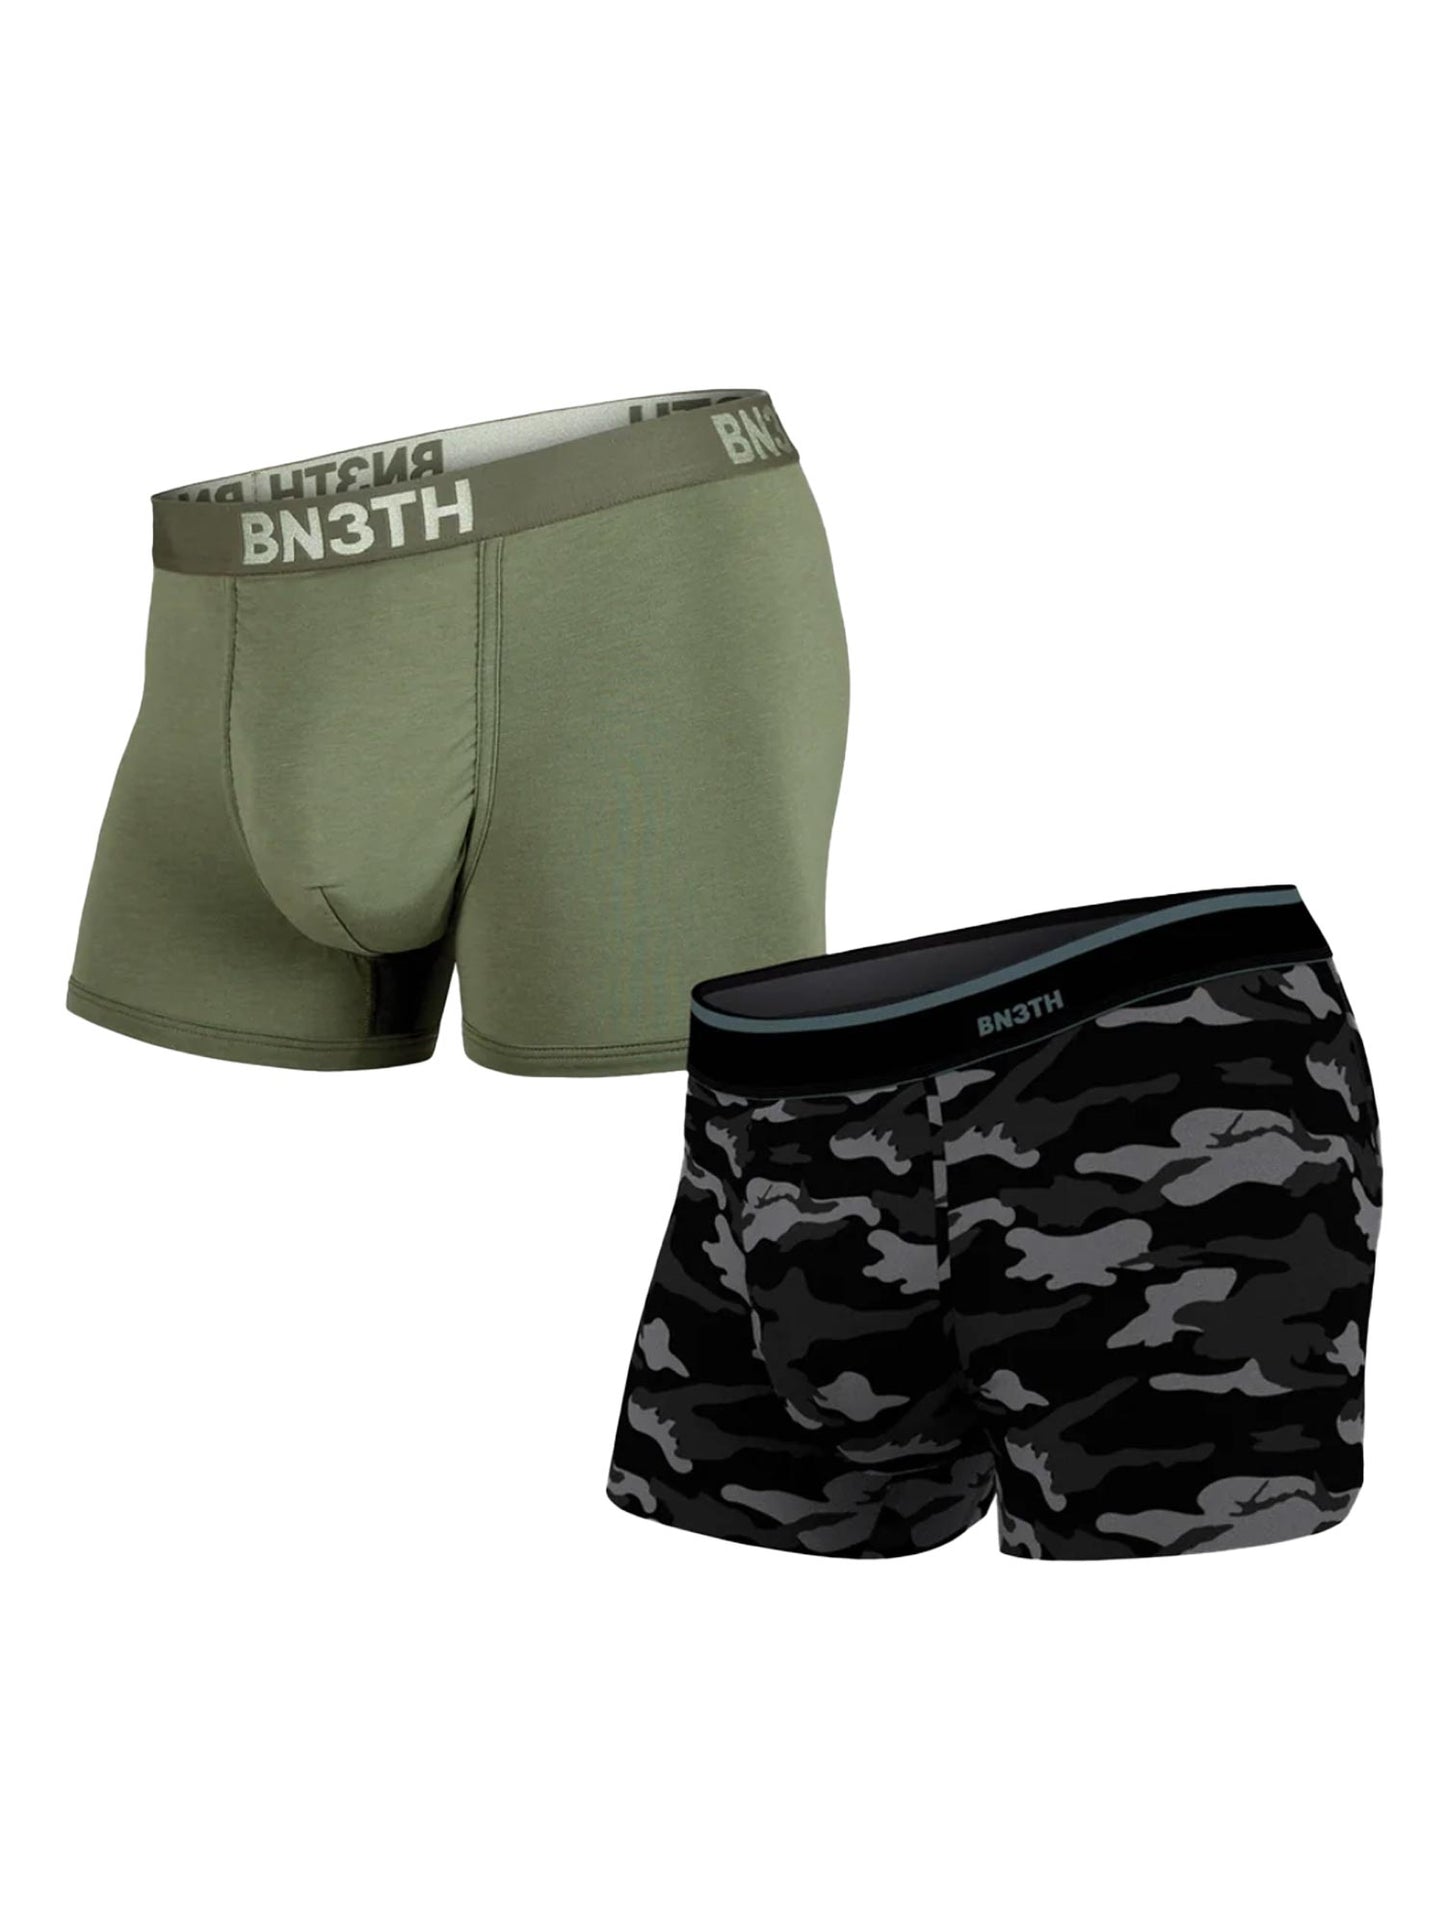 BN3TH Classic Boxer Brief - 2 Pack - Men's